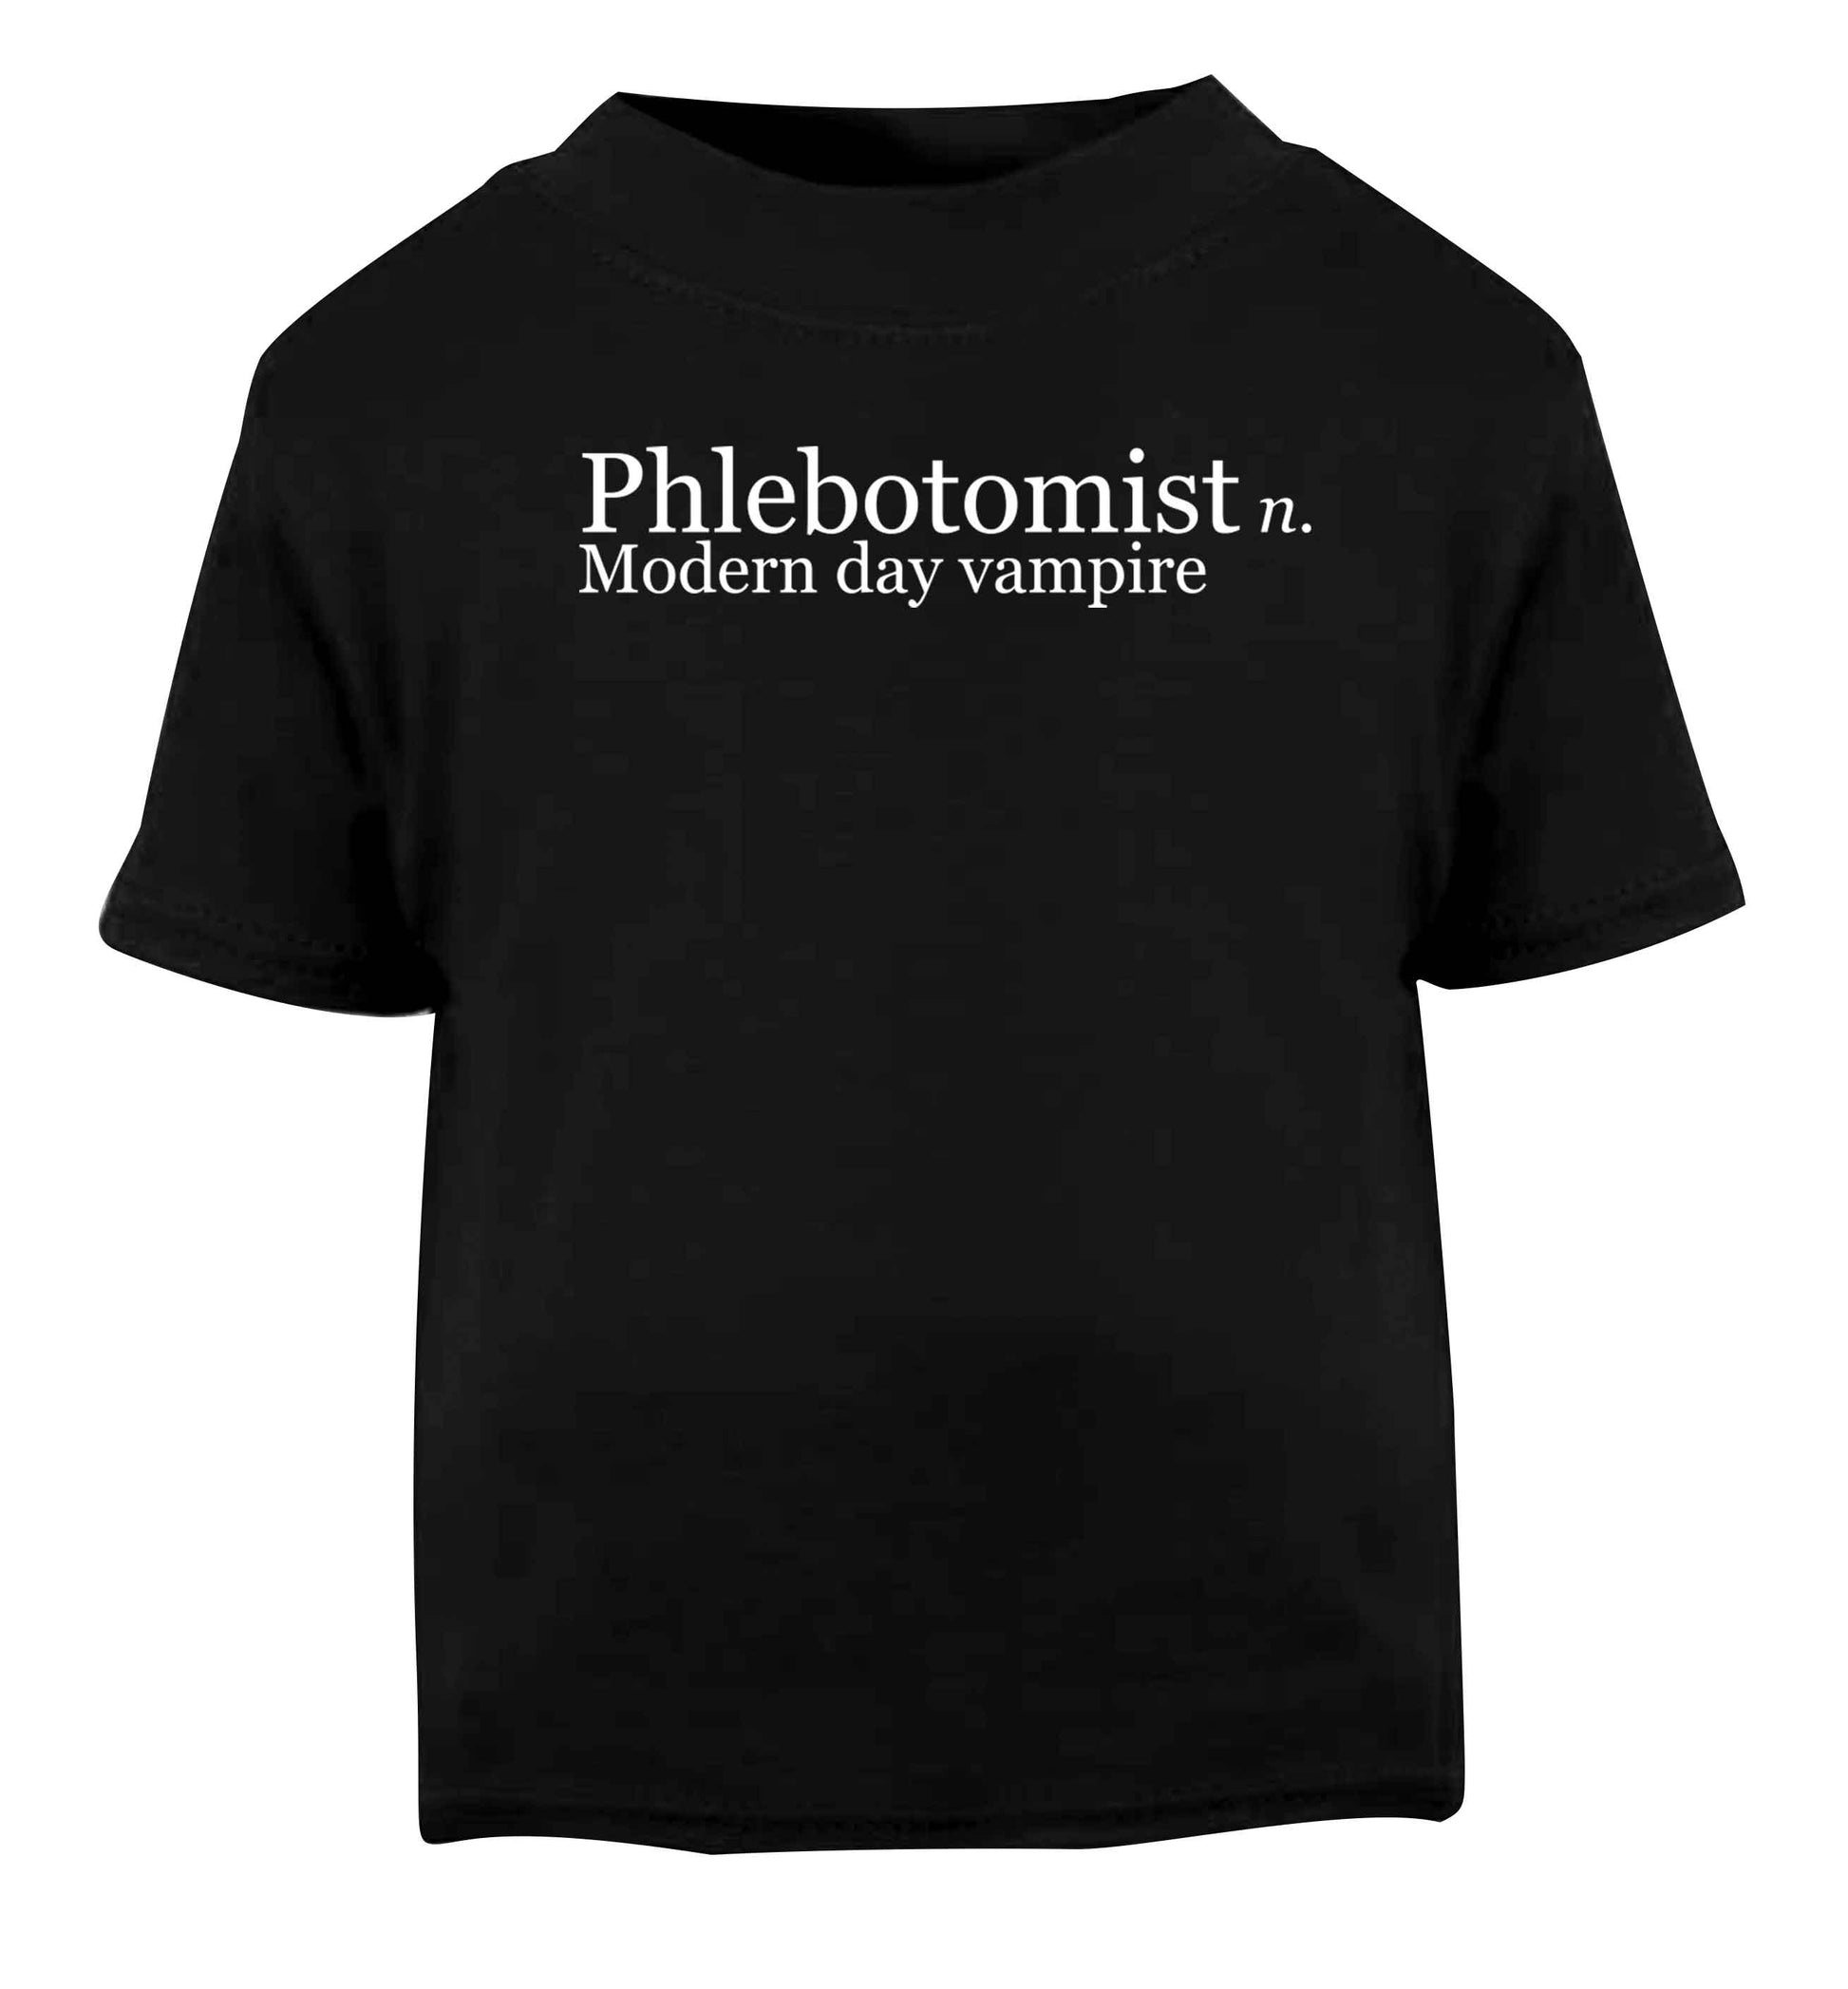 Phlebotomist - Modern day vampire Black baby toddler Tshirt 2 years